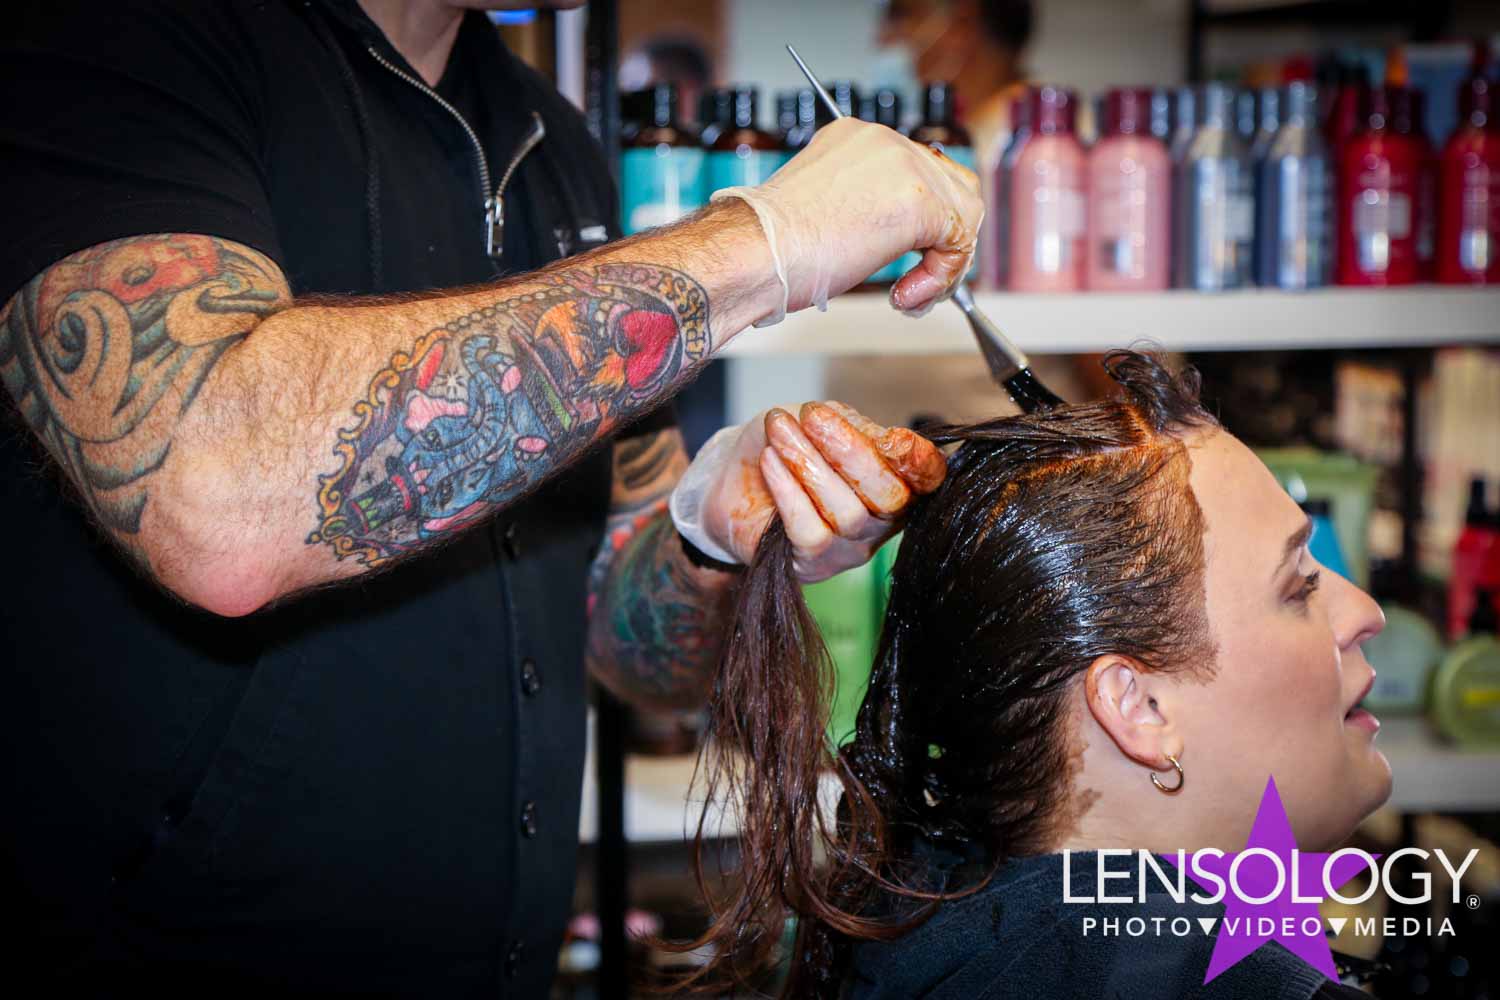 LENSOLOGY.NET - Haircuttery Aventura Salon grand opening, Miami, FL.
Email: info@lensology.net
www.lensology.net